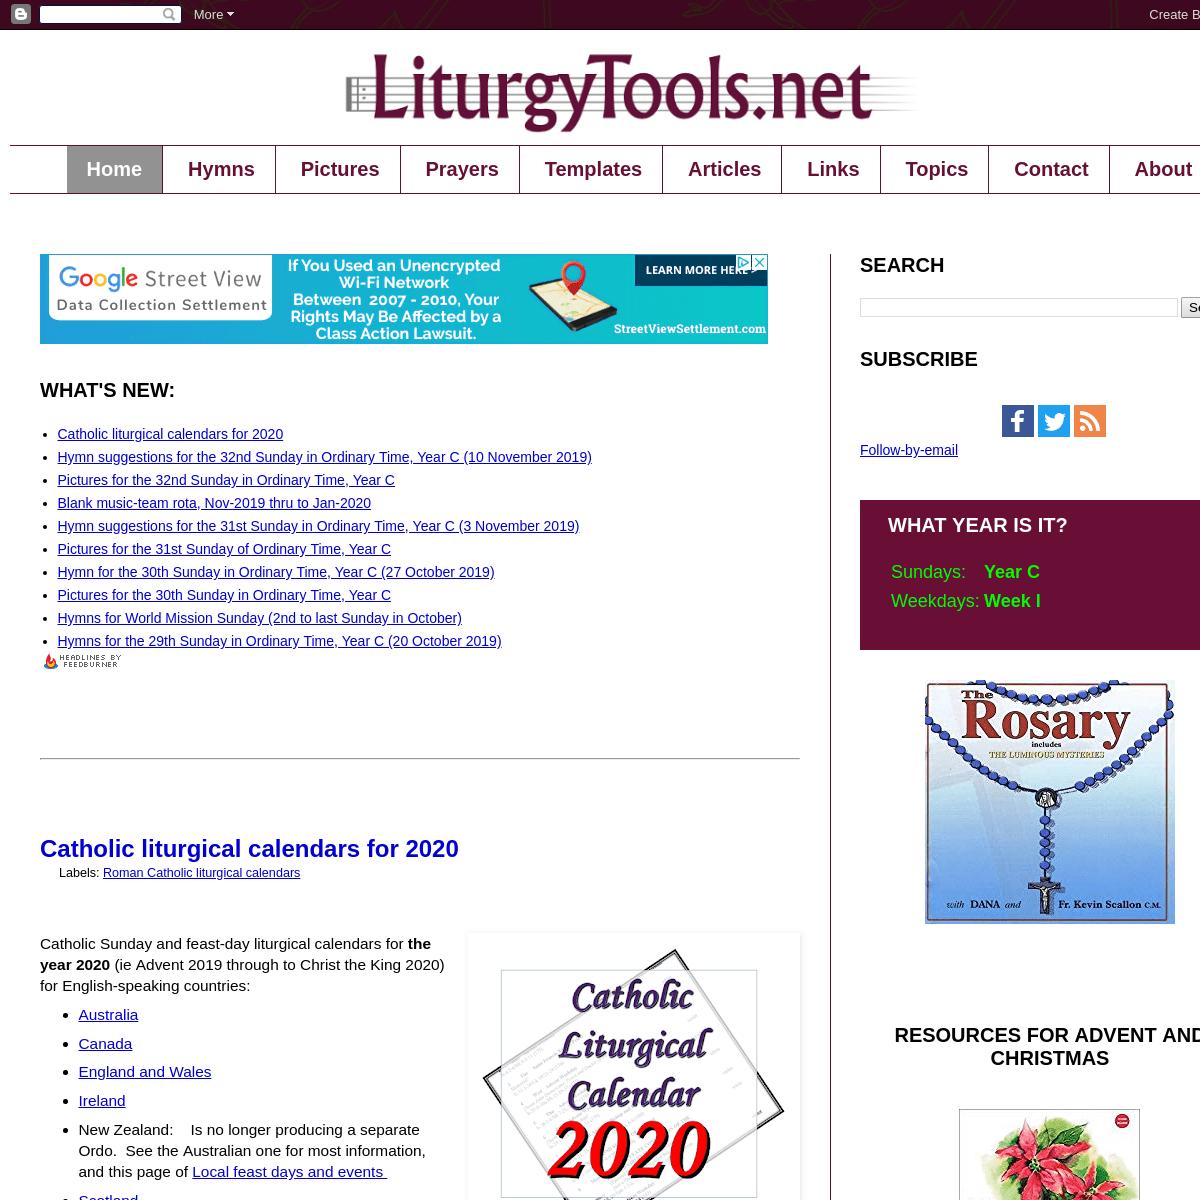 A complete backup of liturgytools.net